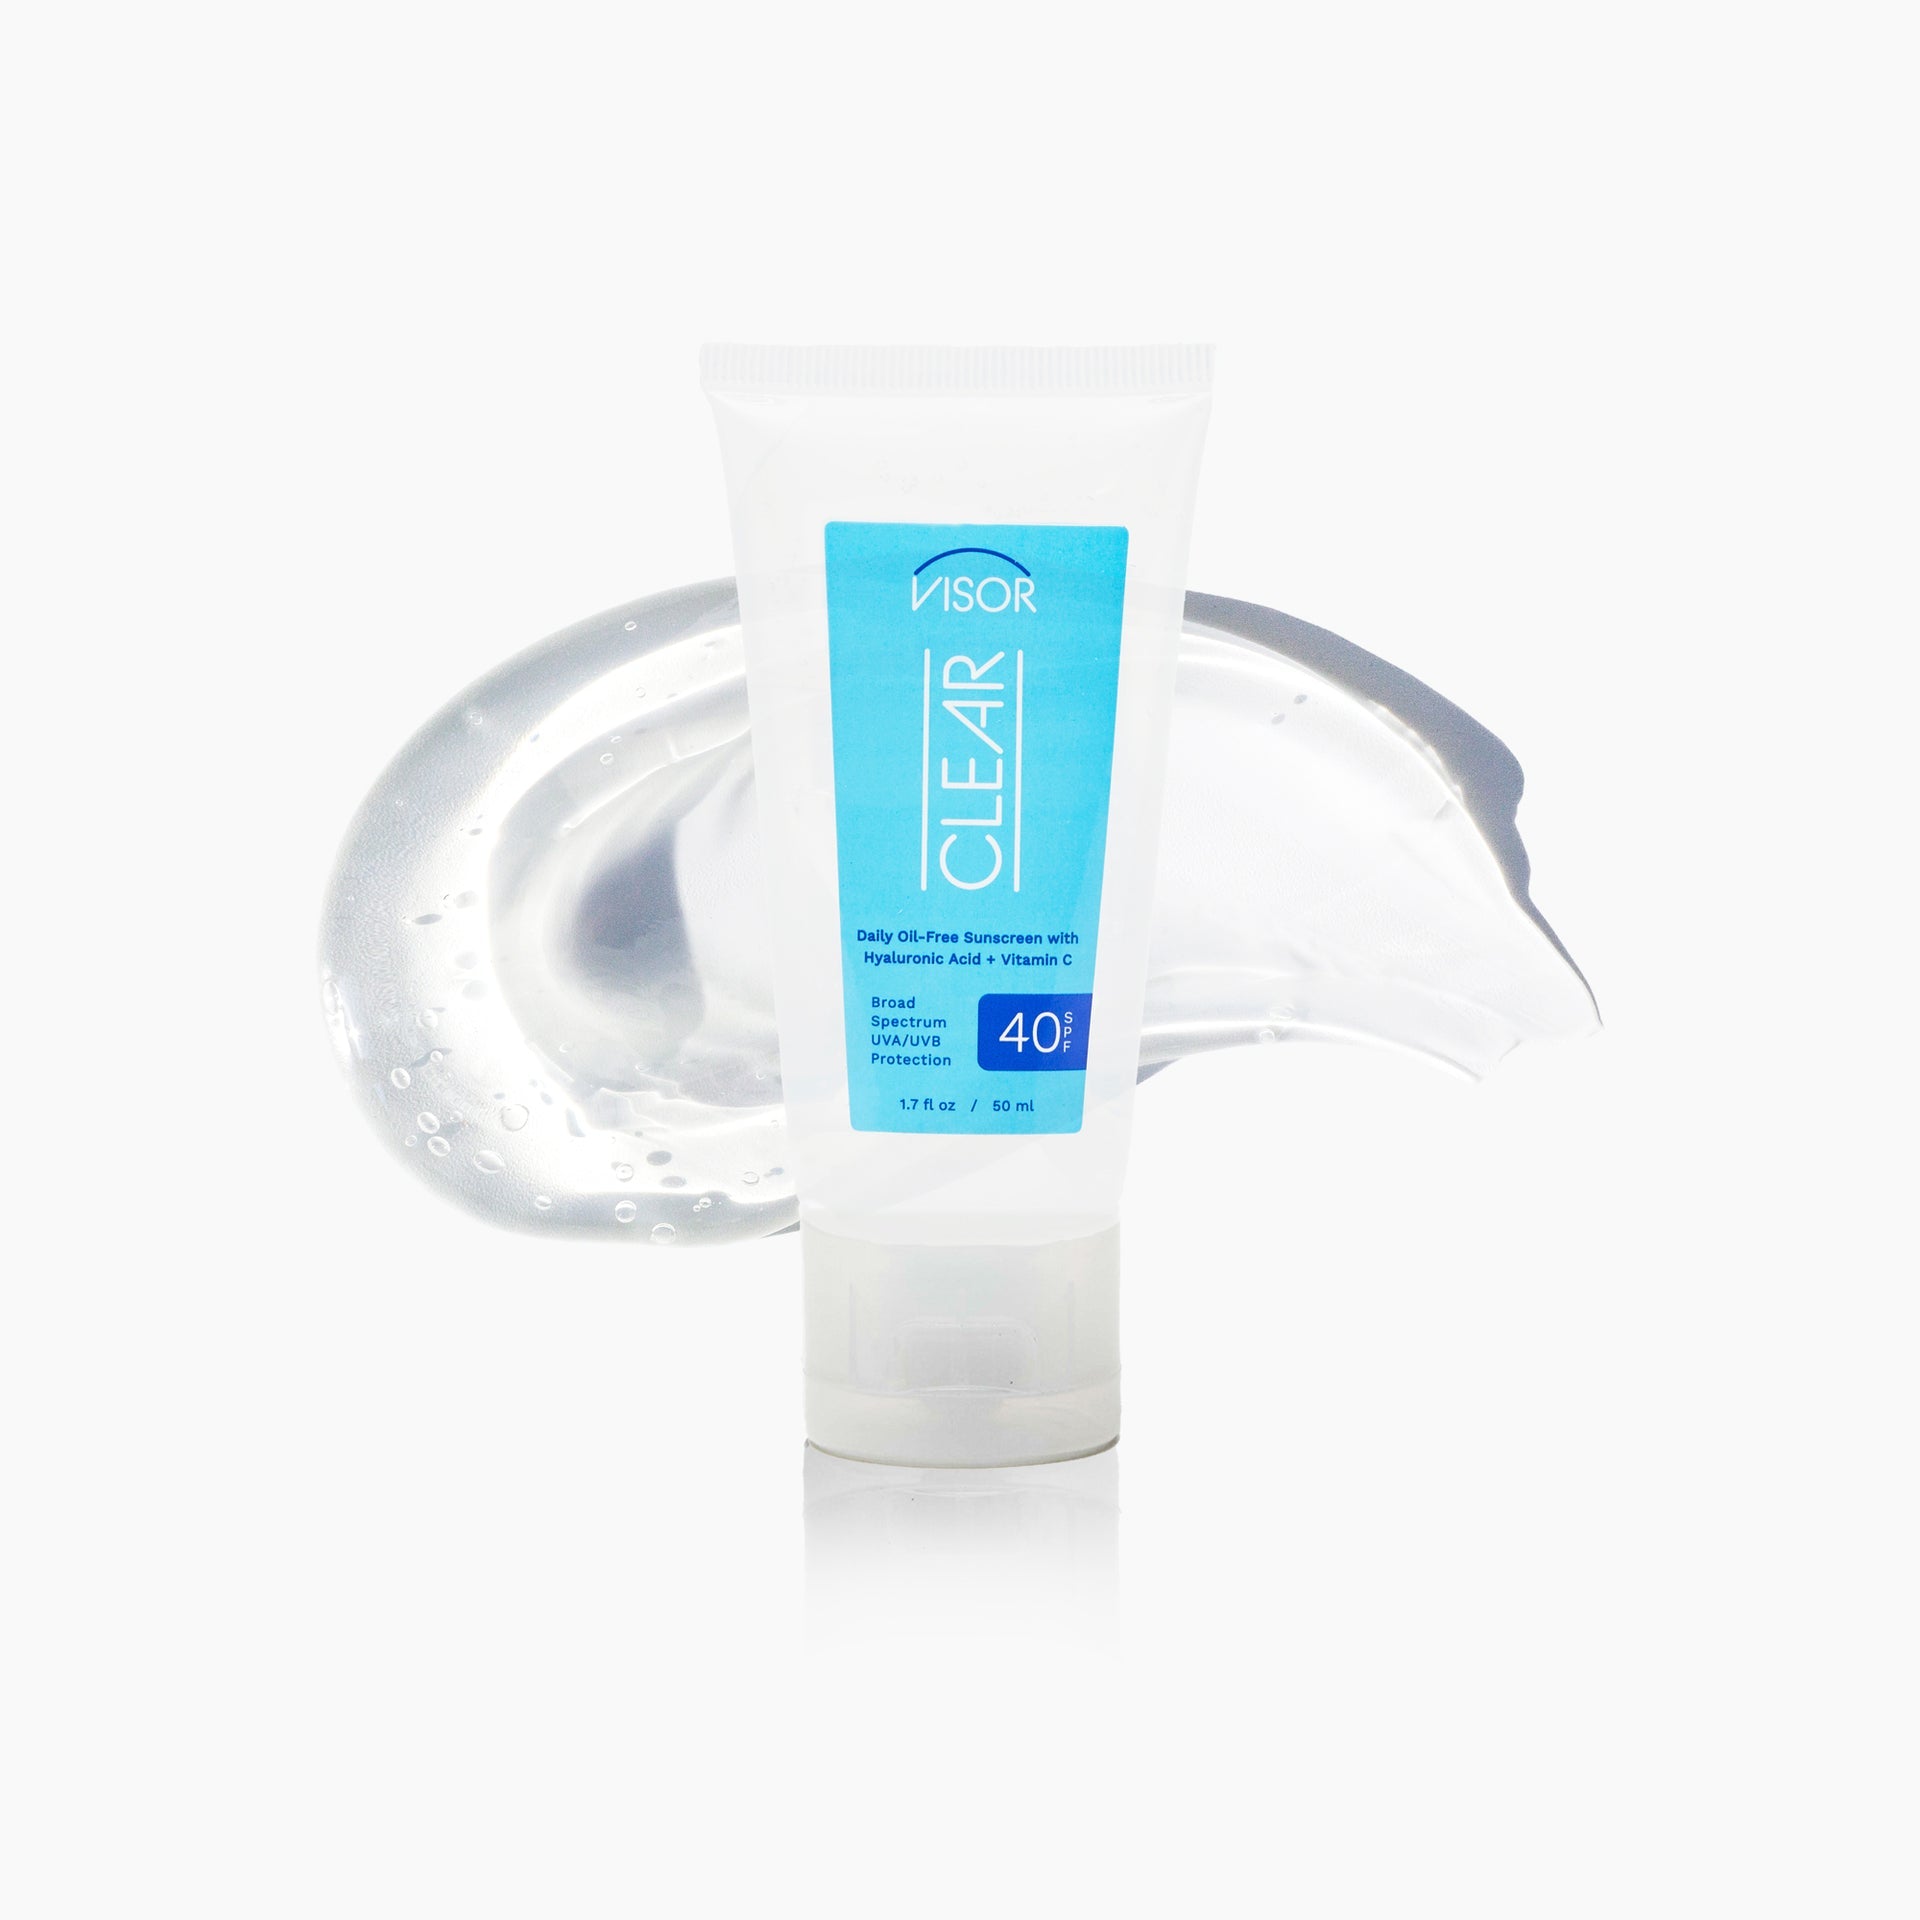 Visor Clear Oil Free Suncreen 3.4 oz Accessories Visor Skin Care   